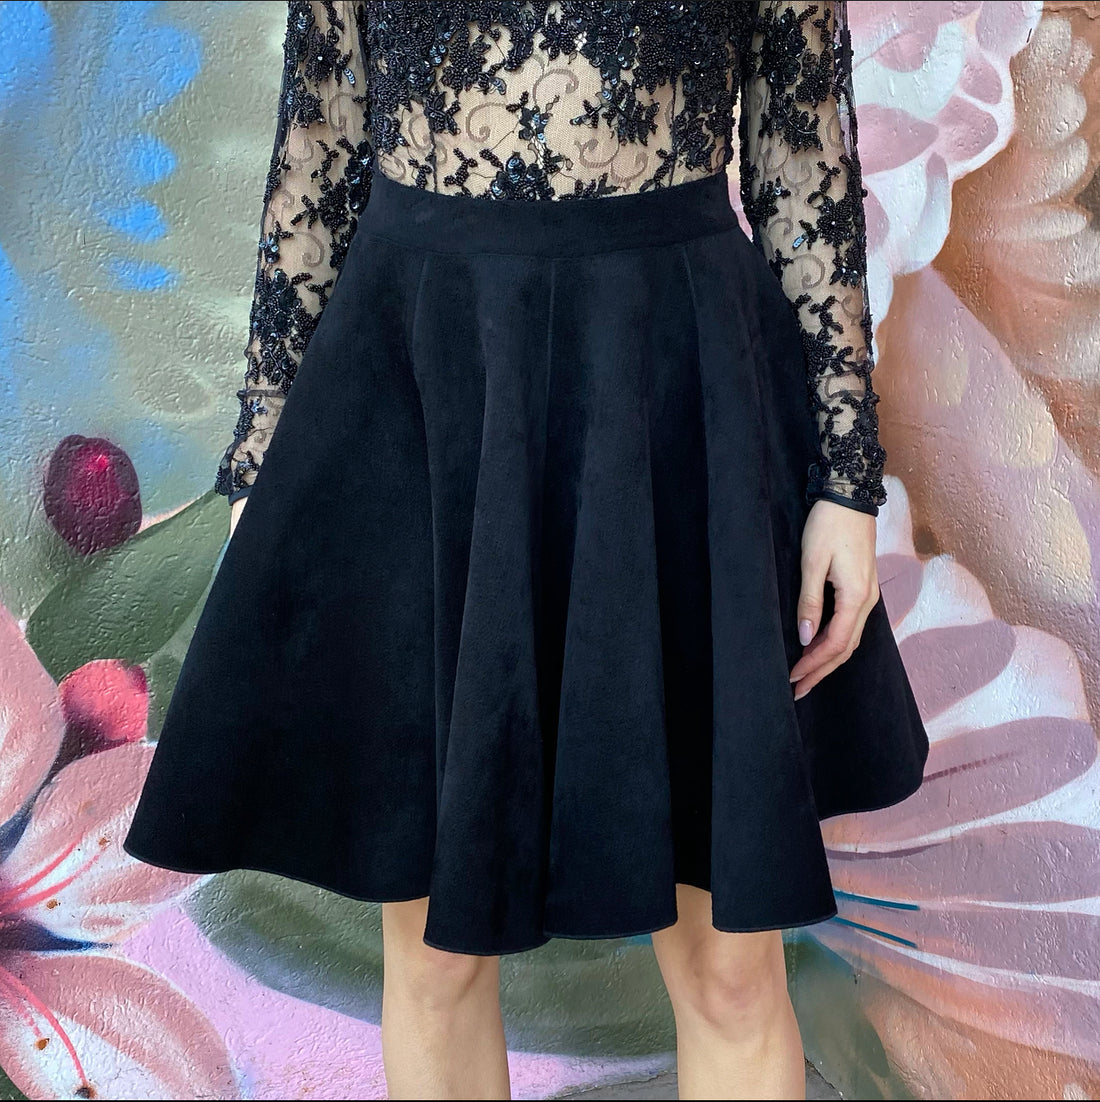 Alaia Black Thick Velour Full Circle Mini Skirt - USA 8/10